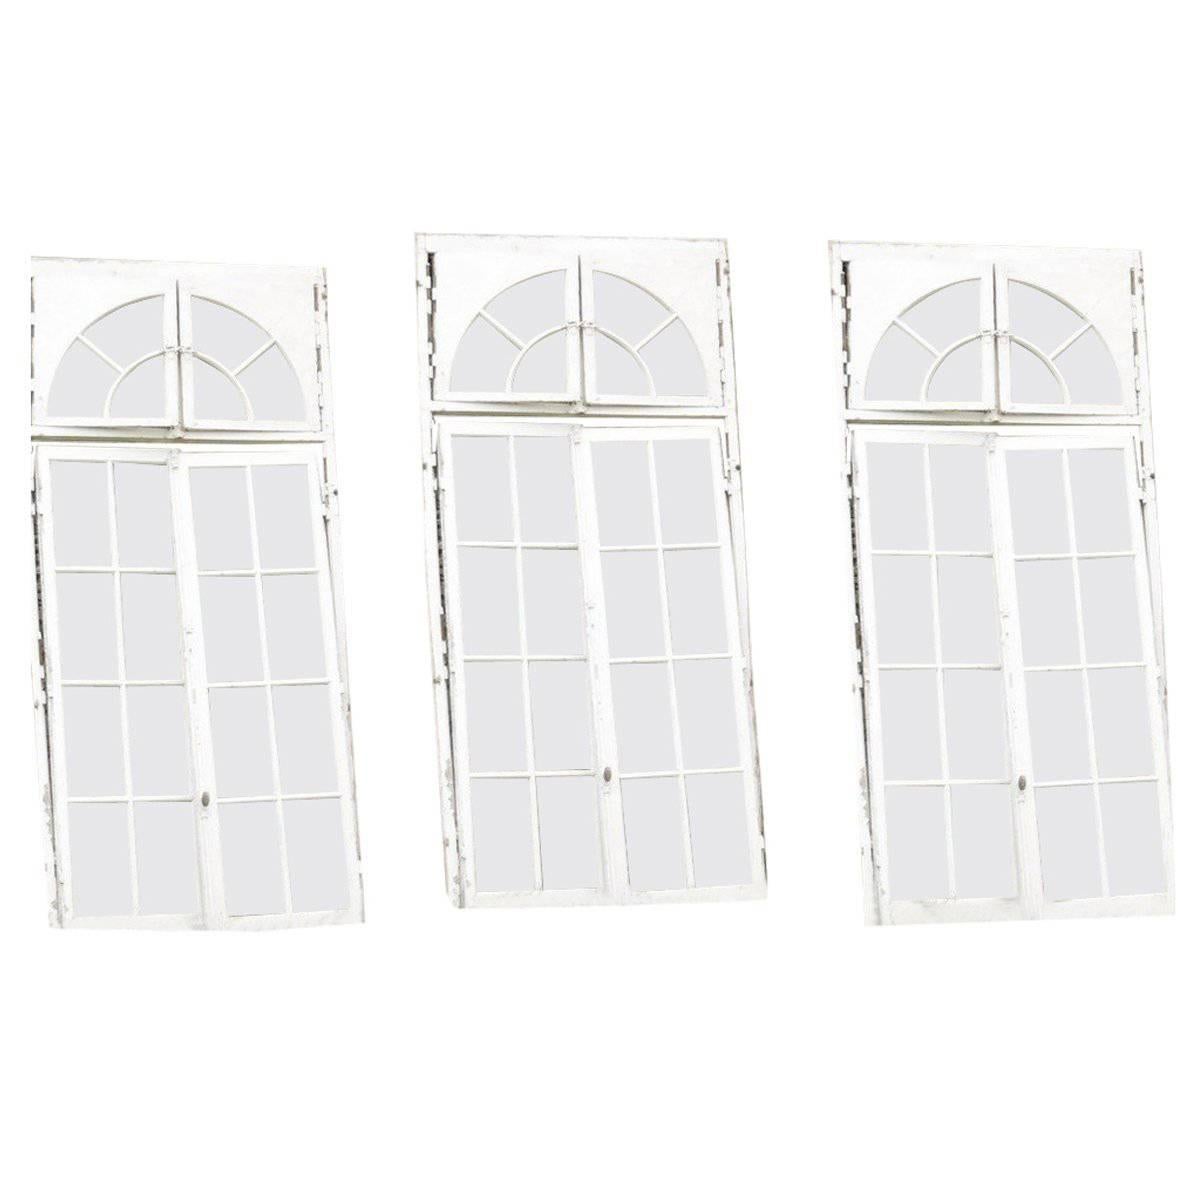 Castle Orangerie Windows Doors, 19th Century